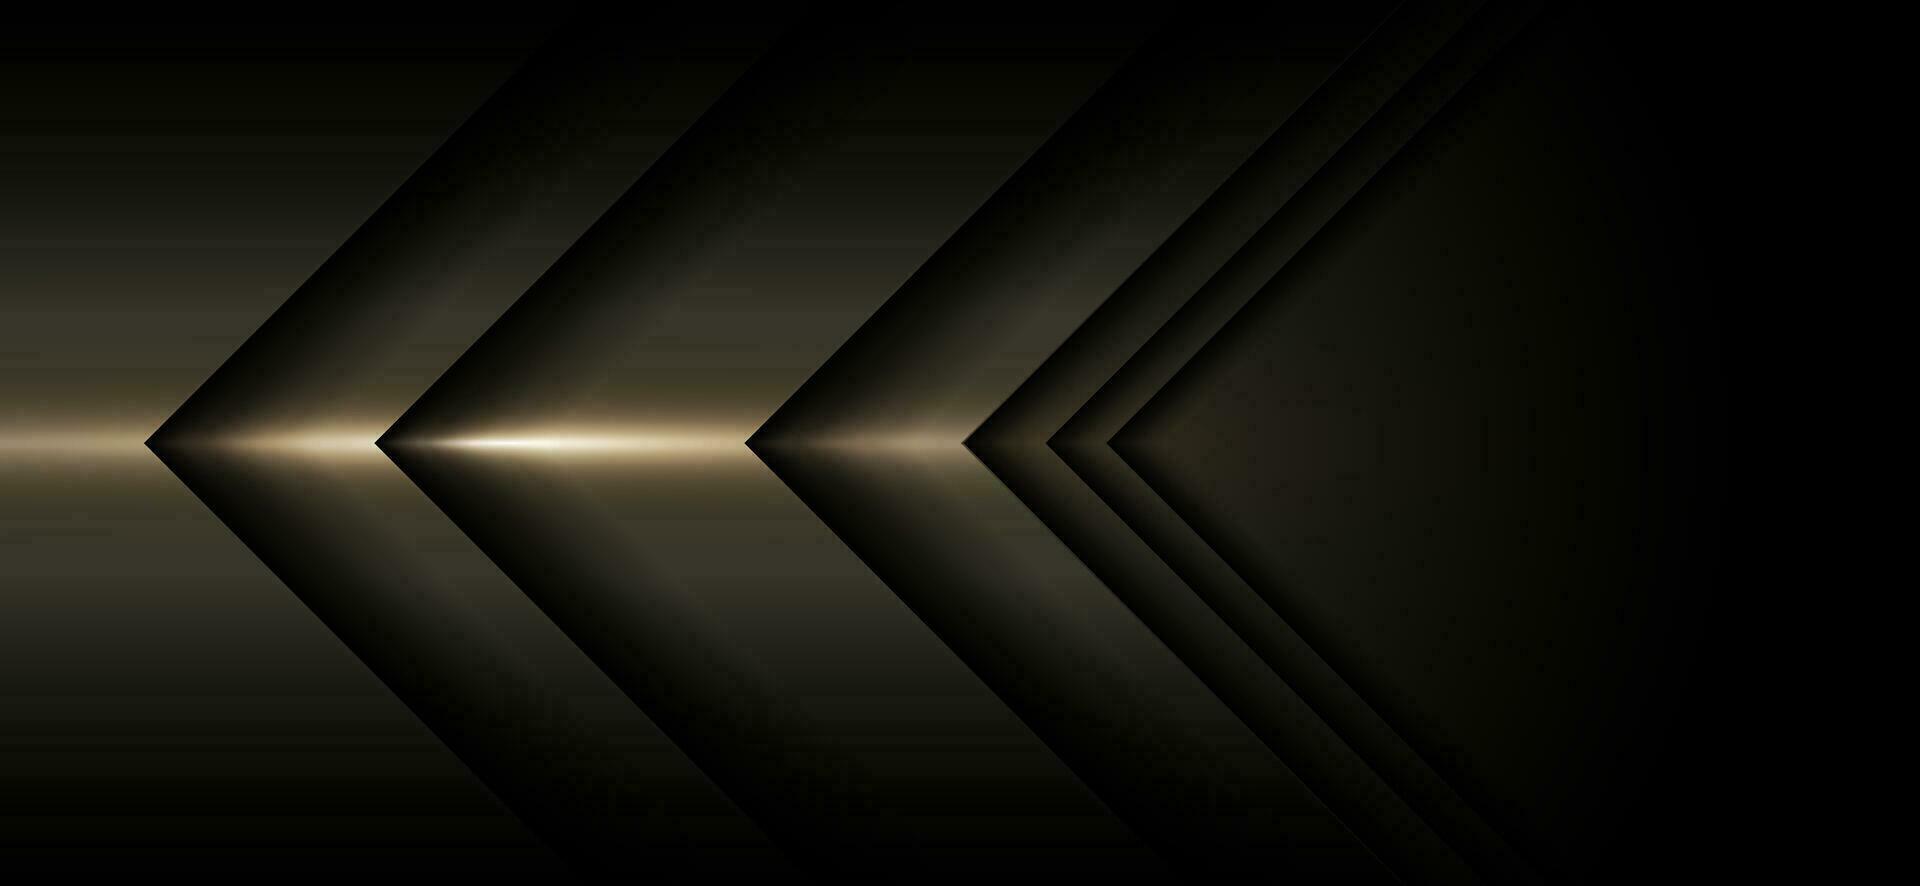 metal arrow texture abstract with golden light premium on dark black luxury futuristic modern design background. vector illustration